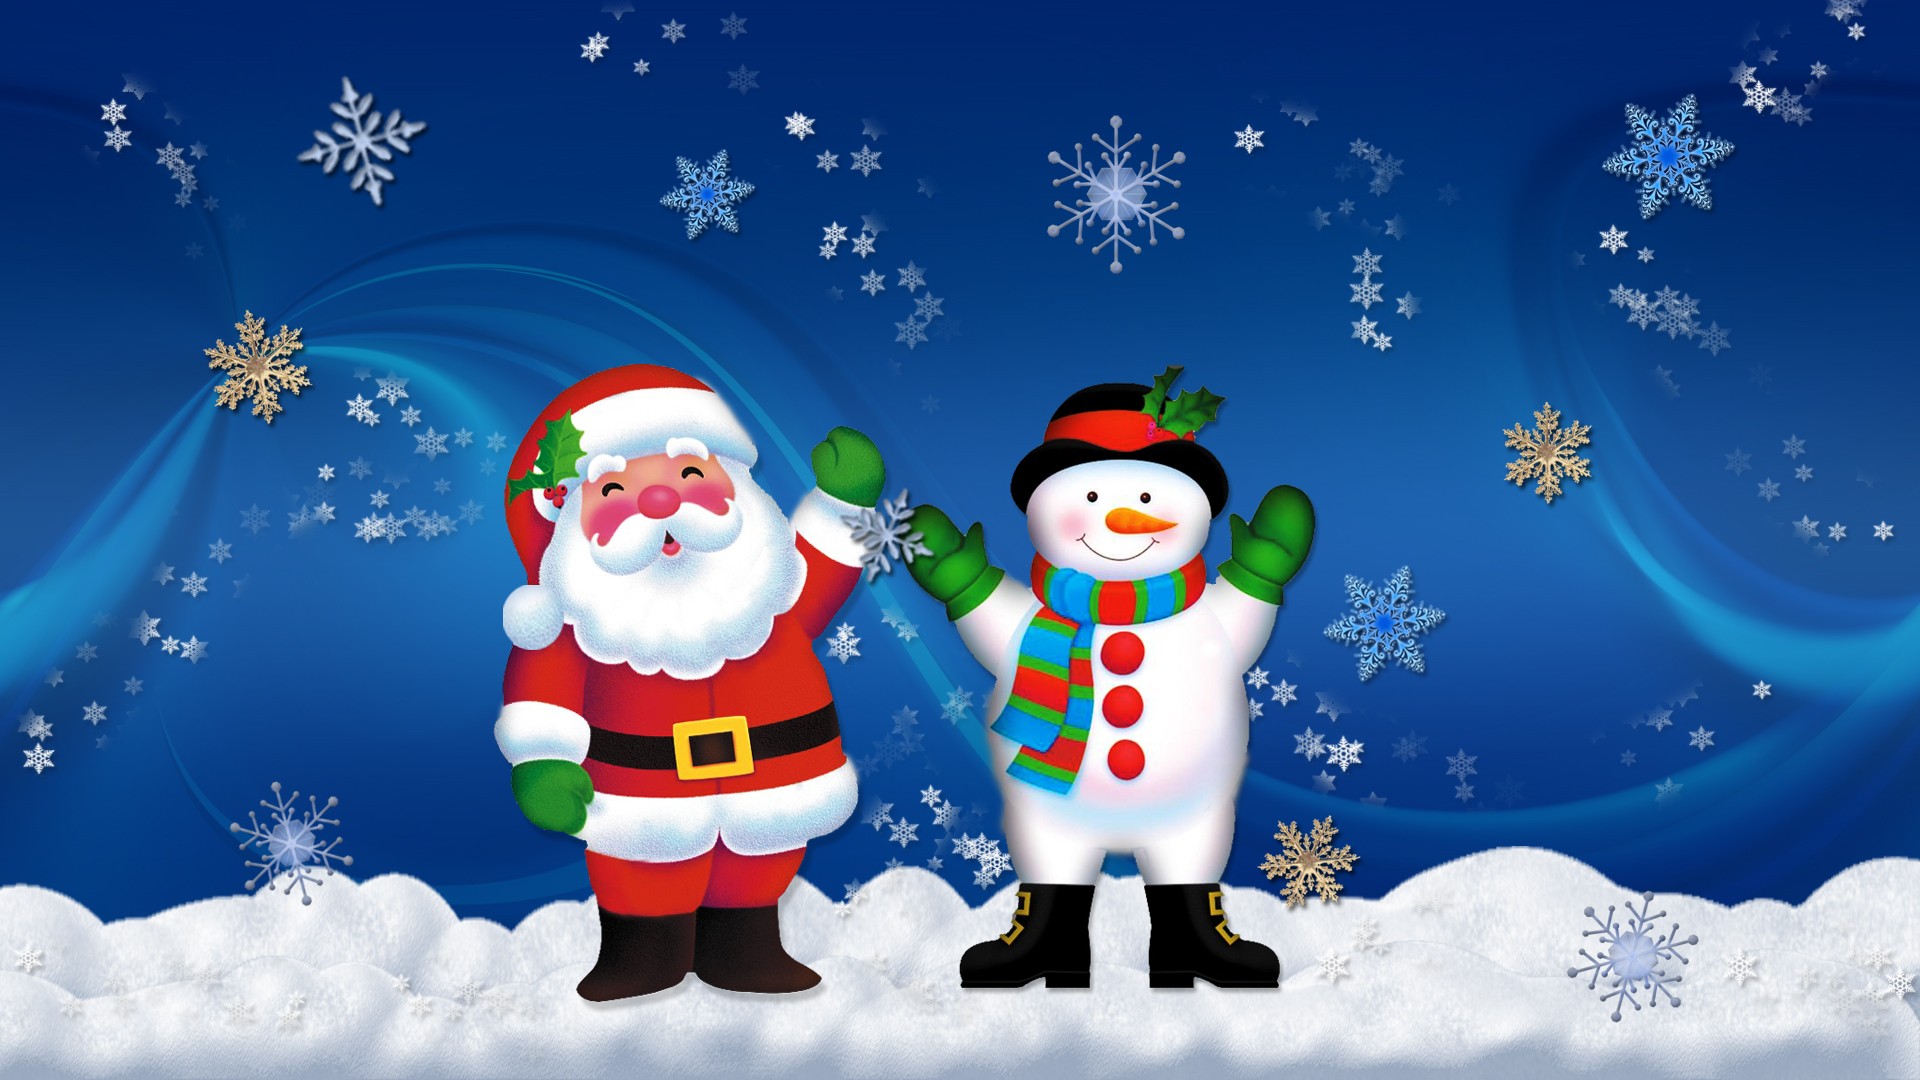 Merry Christmas - Christmas Wallpaper (32790266) - Fanpop